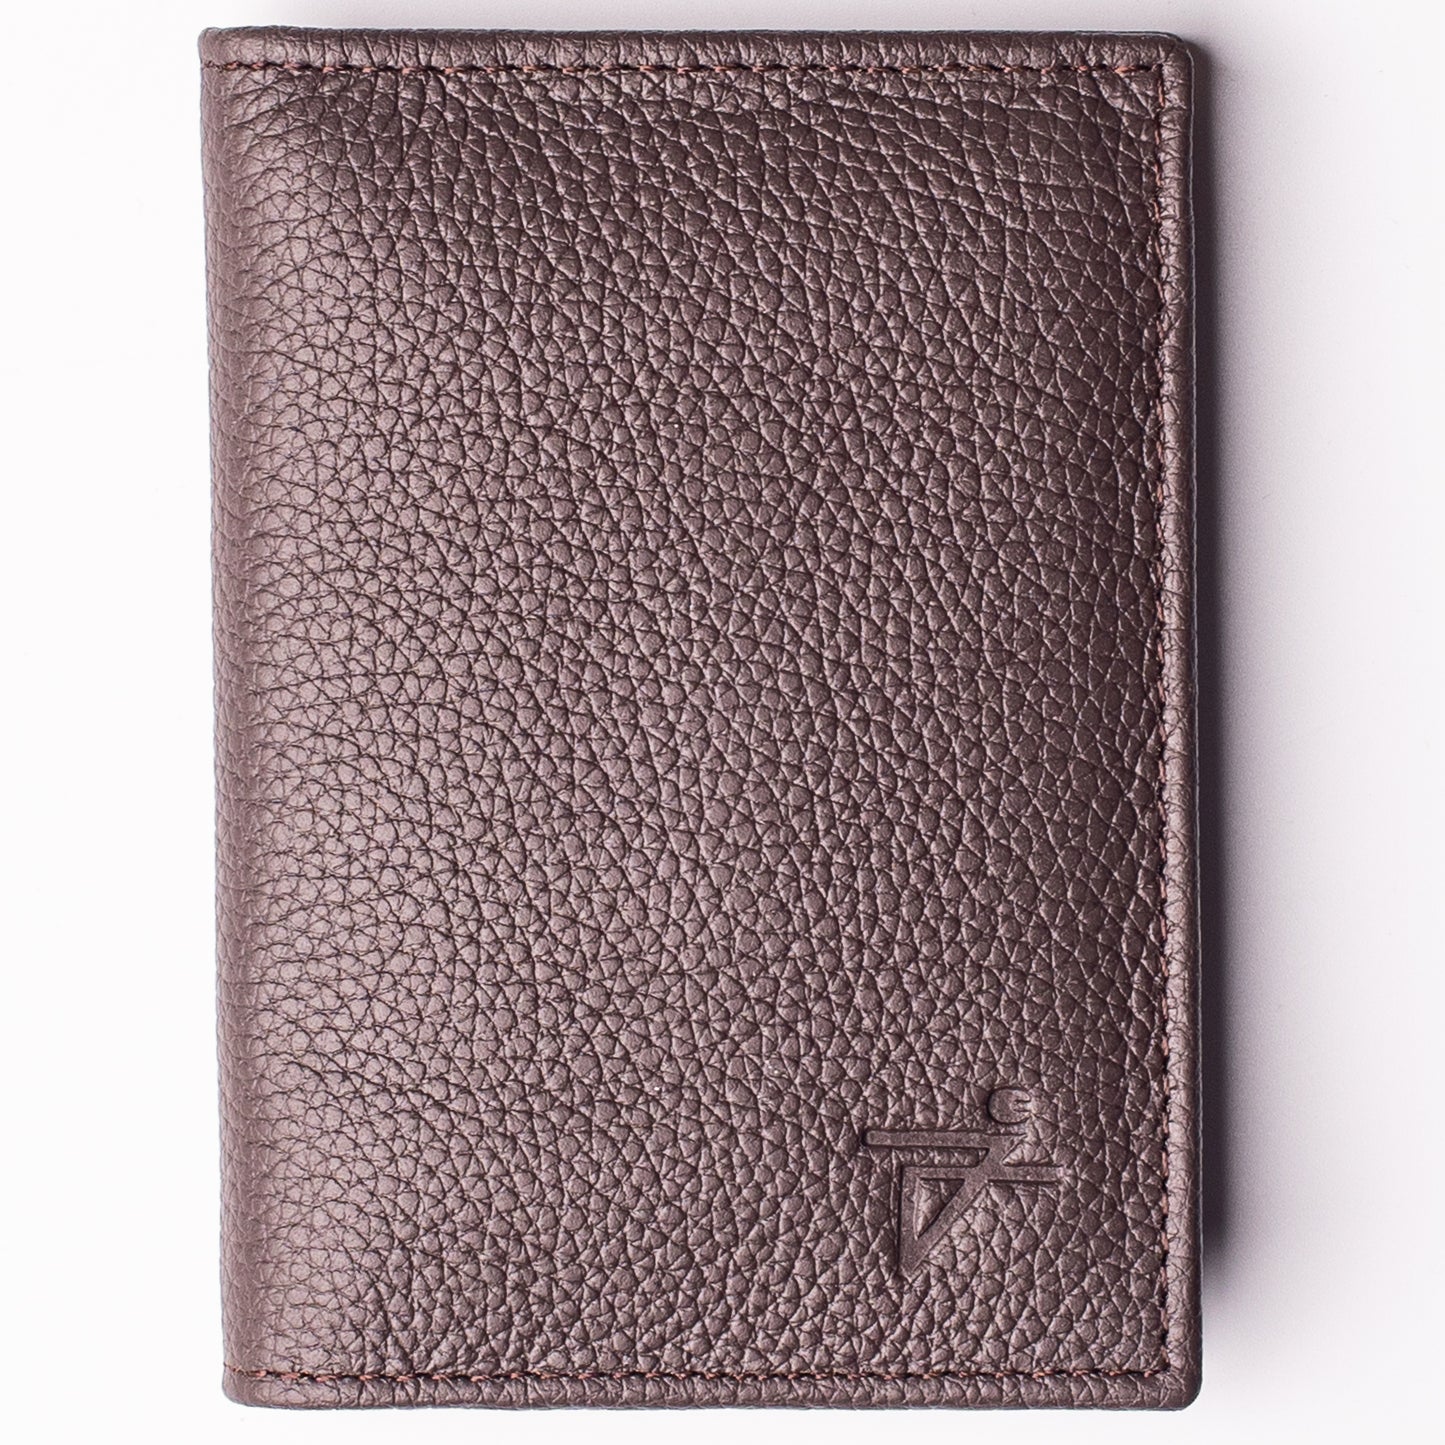 L-Fold Wallet unisex RFID Leather